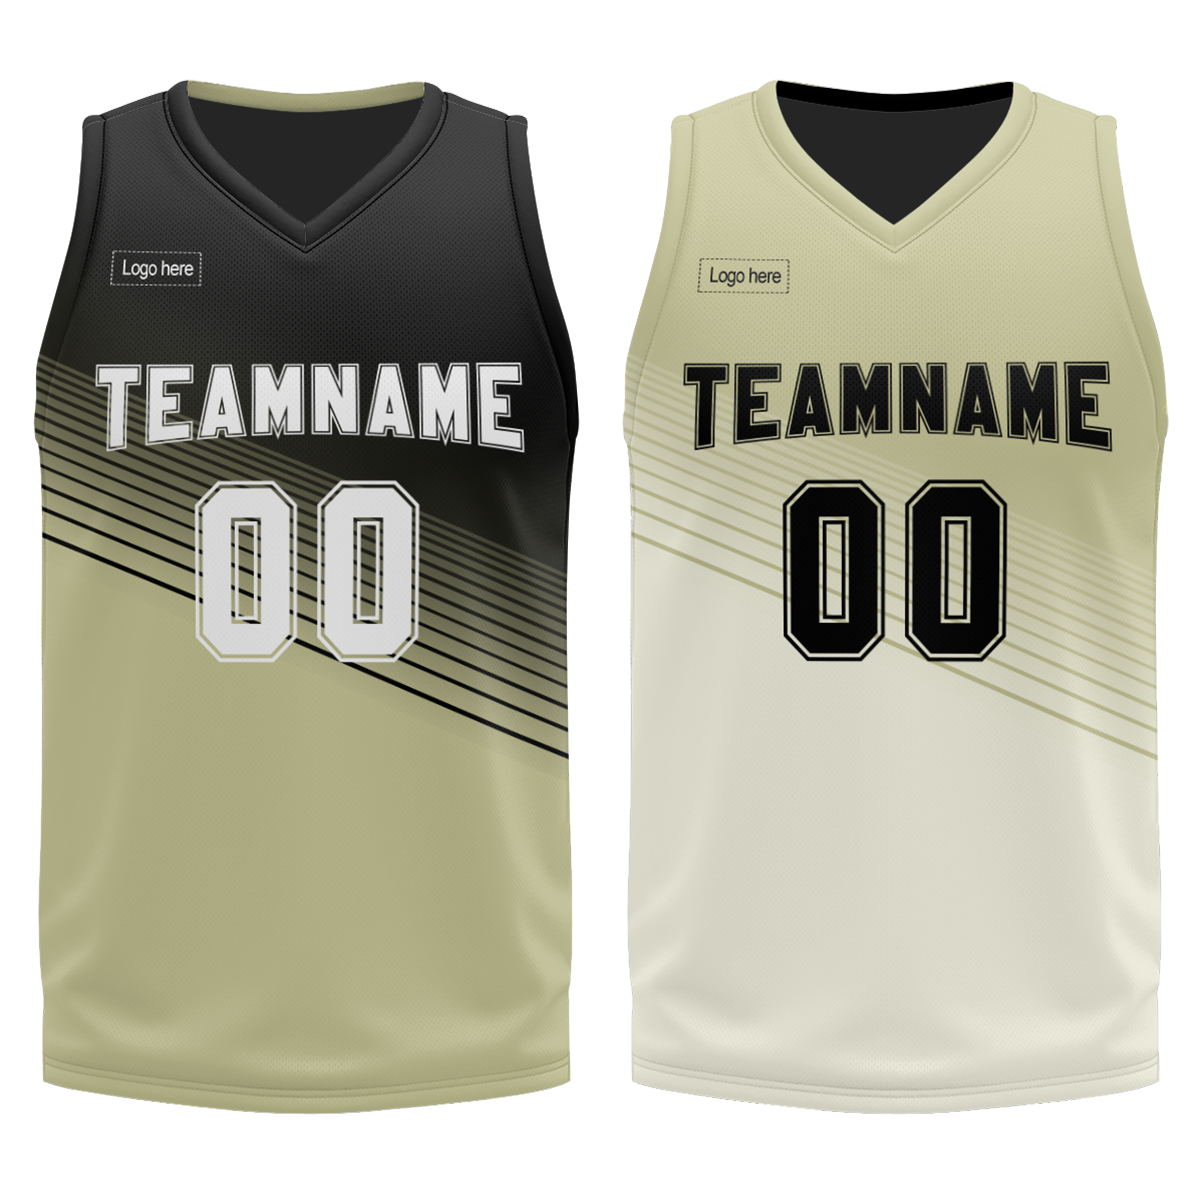 new-fashion-unique-reversible-basketball-jerseys-design-full-sublimation-digital-printing-oem-service-basketball-uniforms-at-cj-pod-4